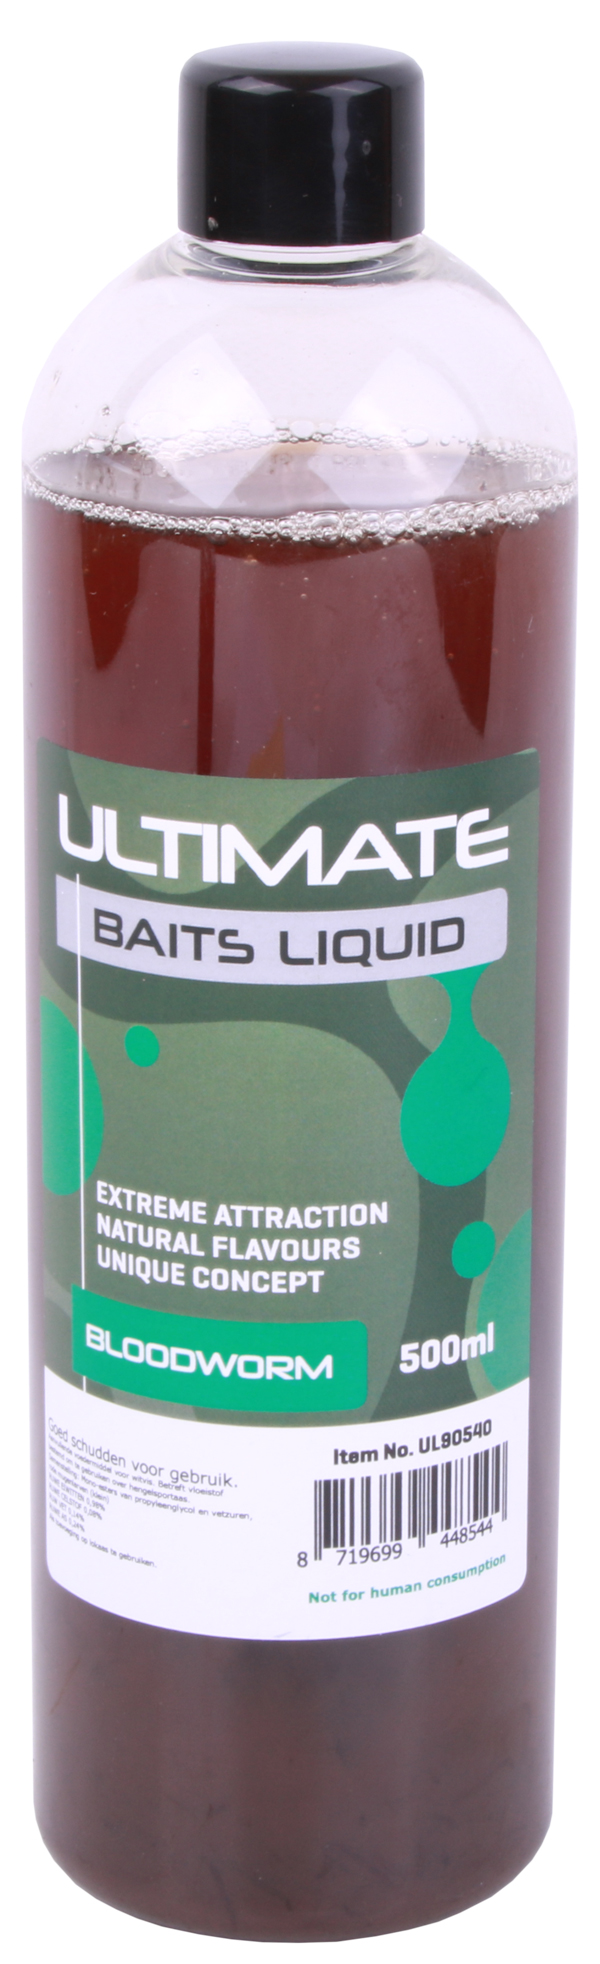 Ultimate Baits Liquid 500ml - Bloodworm